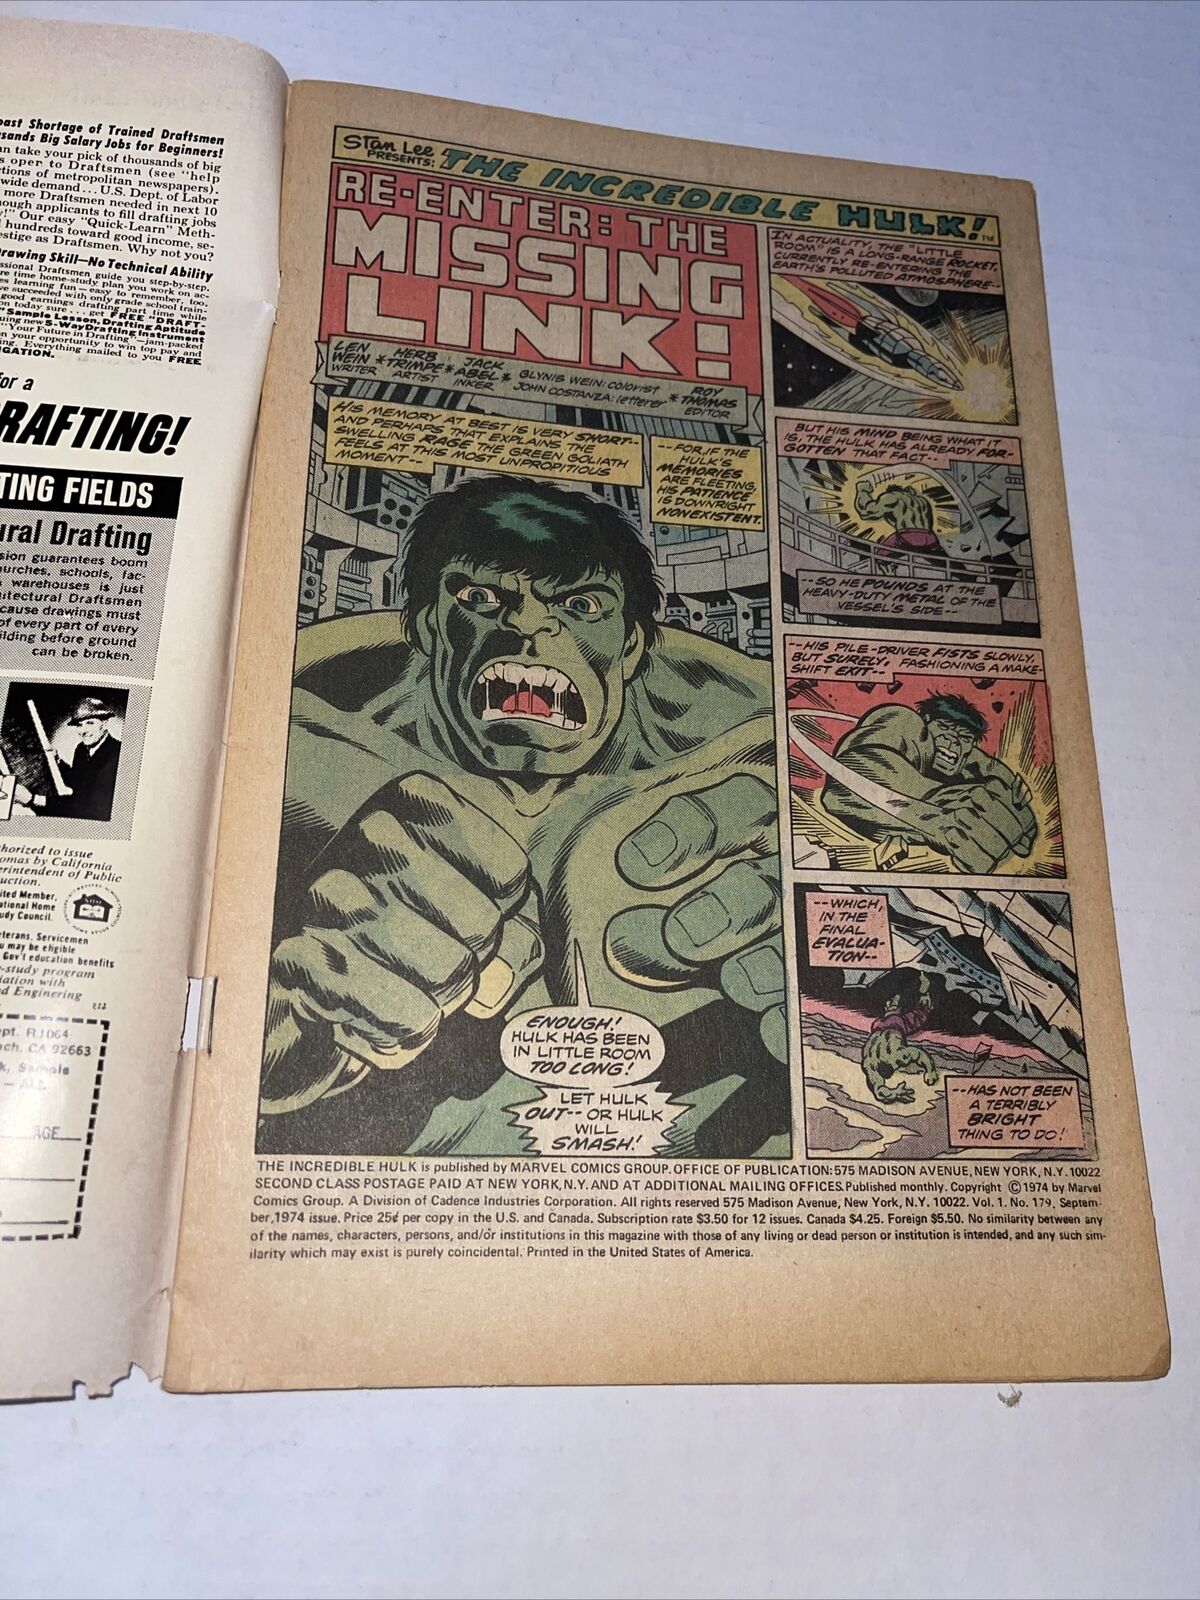 The Incredible Hulk Goes Wild #179 (September 1974, Marvel)